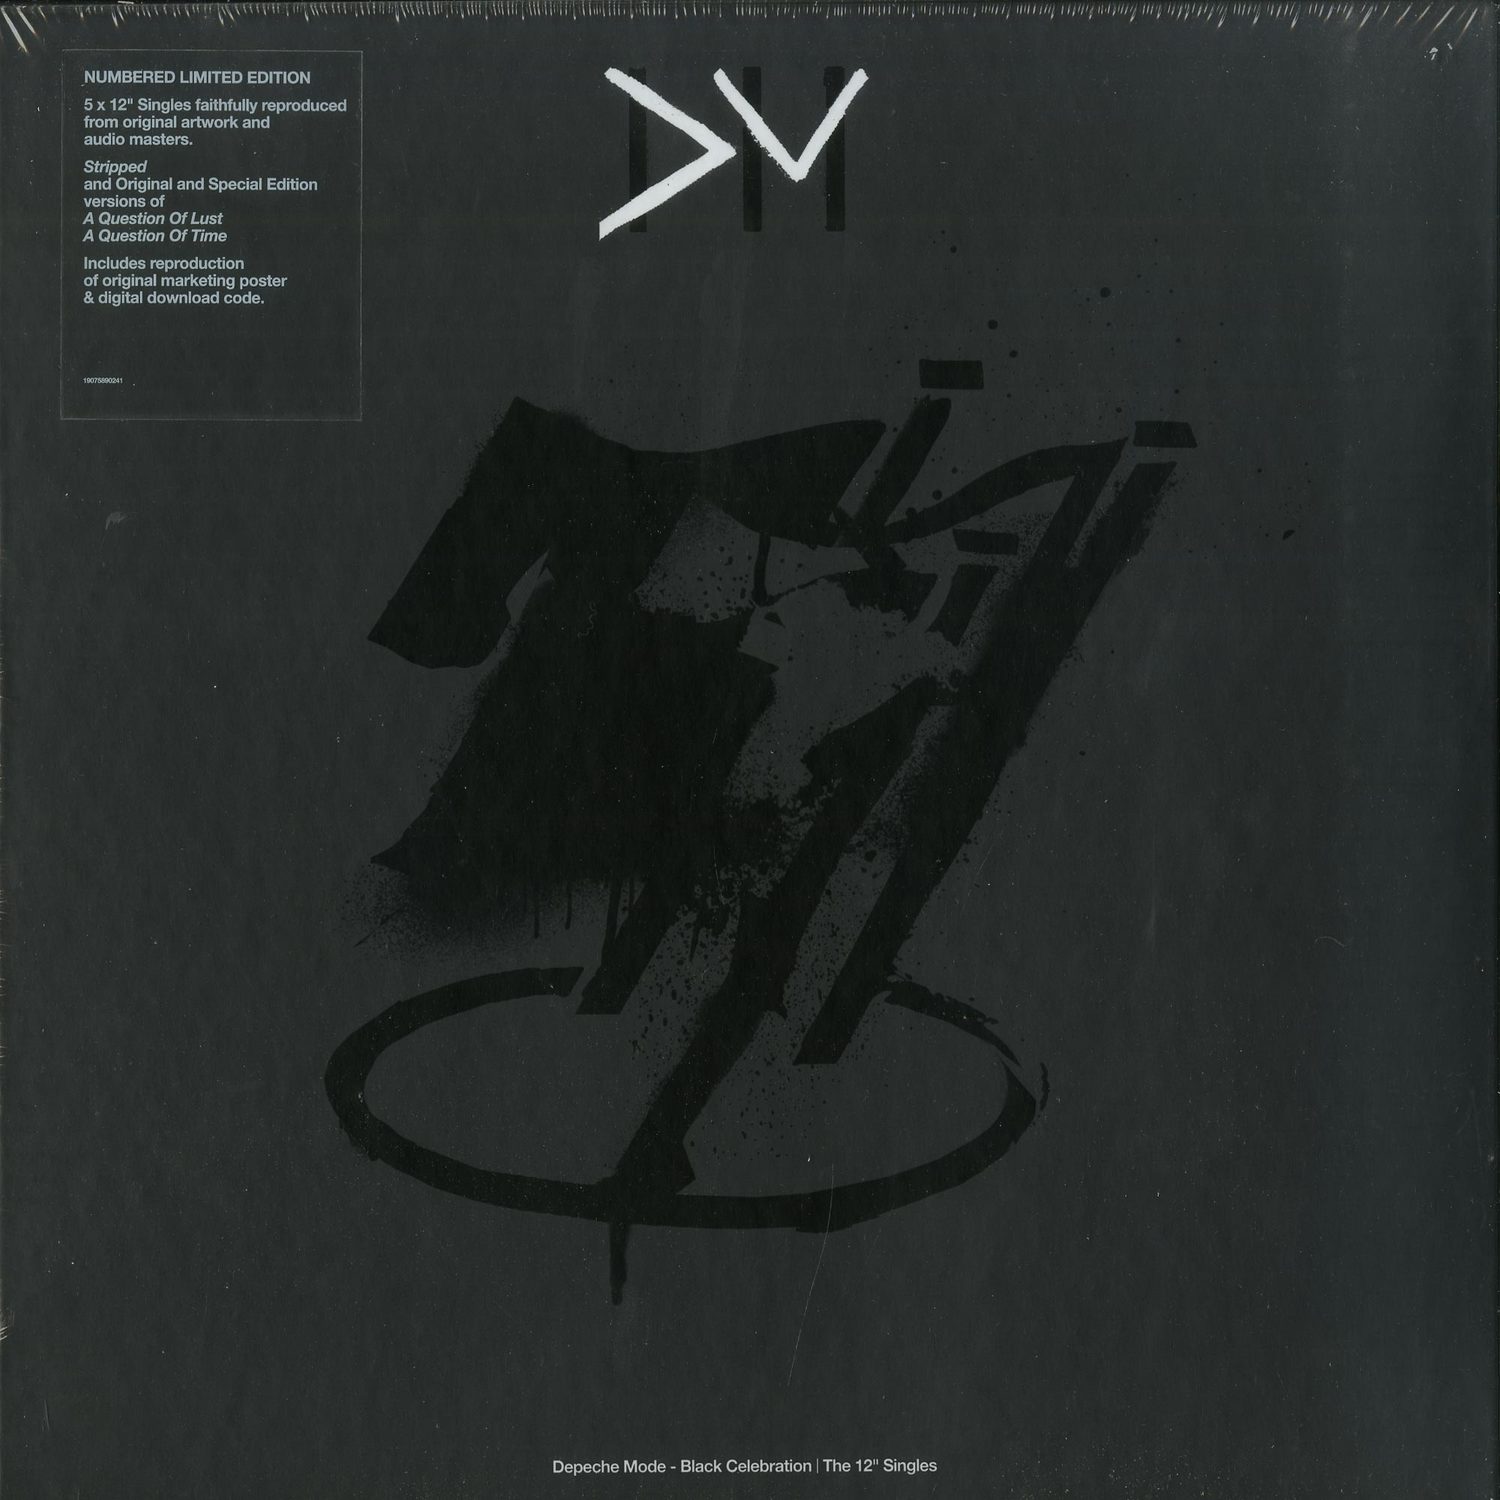 Depeche Mode - BLACK CELEBRATION -THE 12 INCH SINGLES 